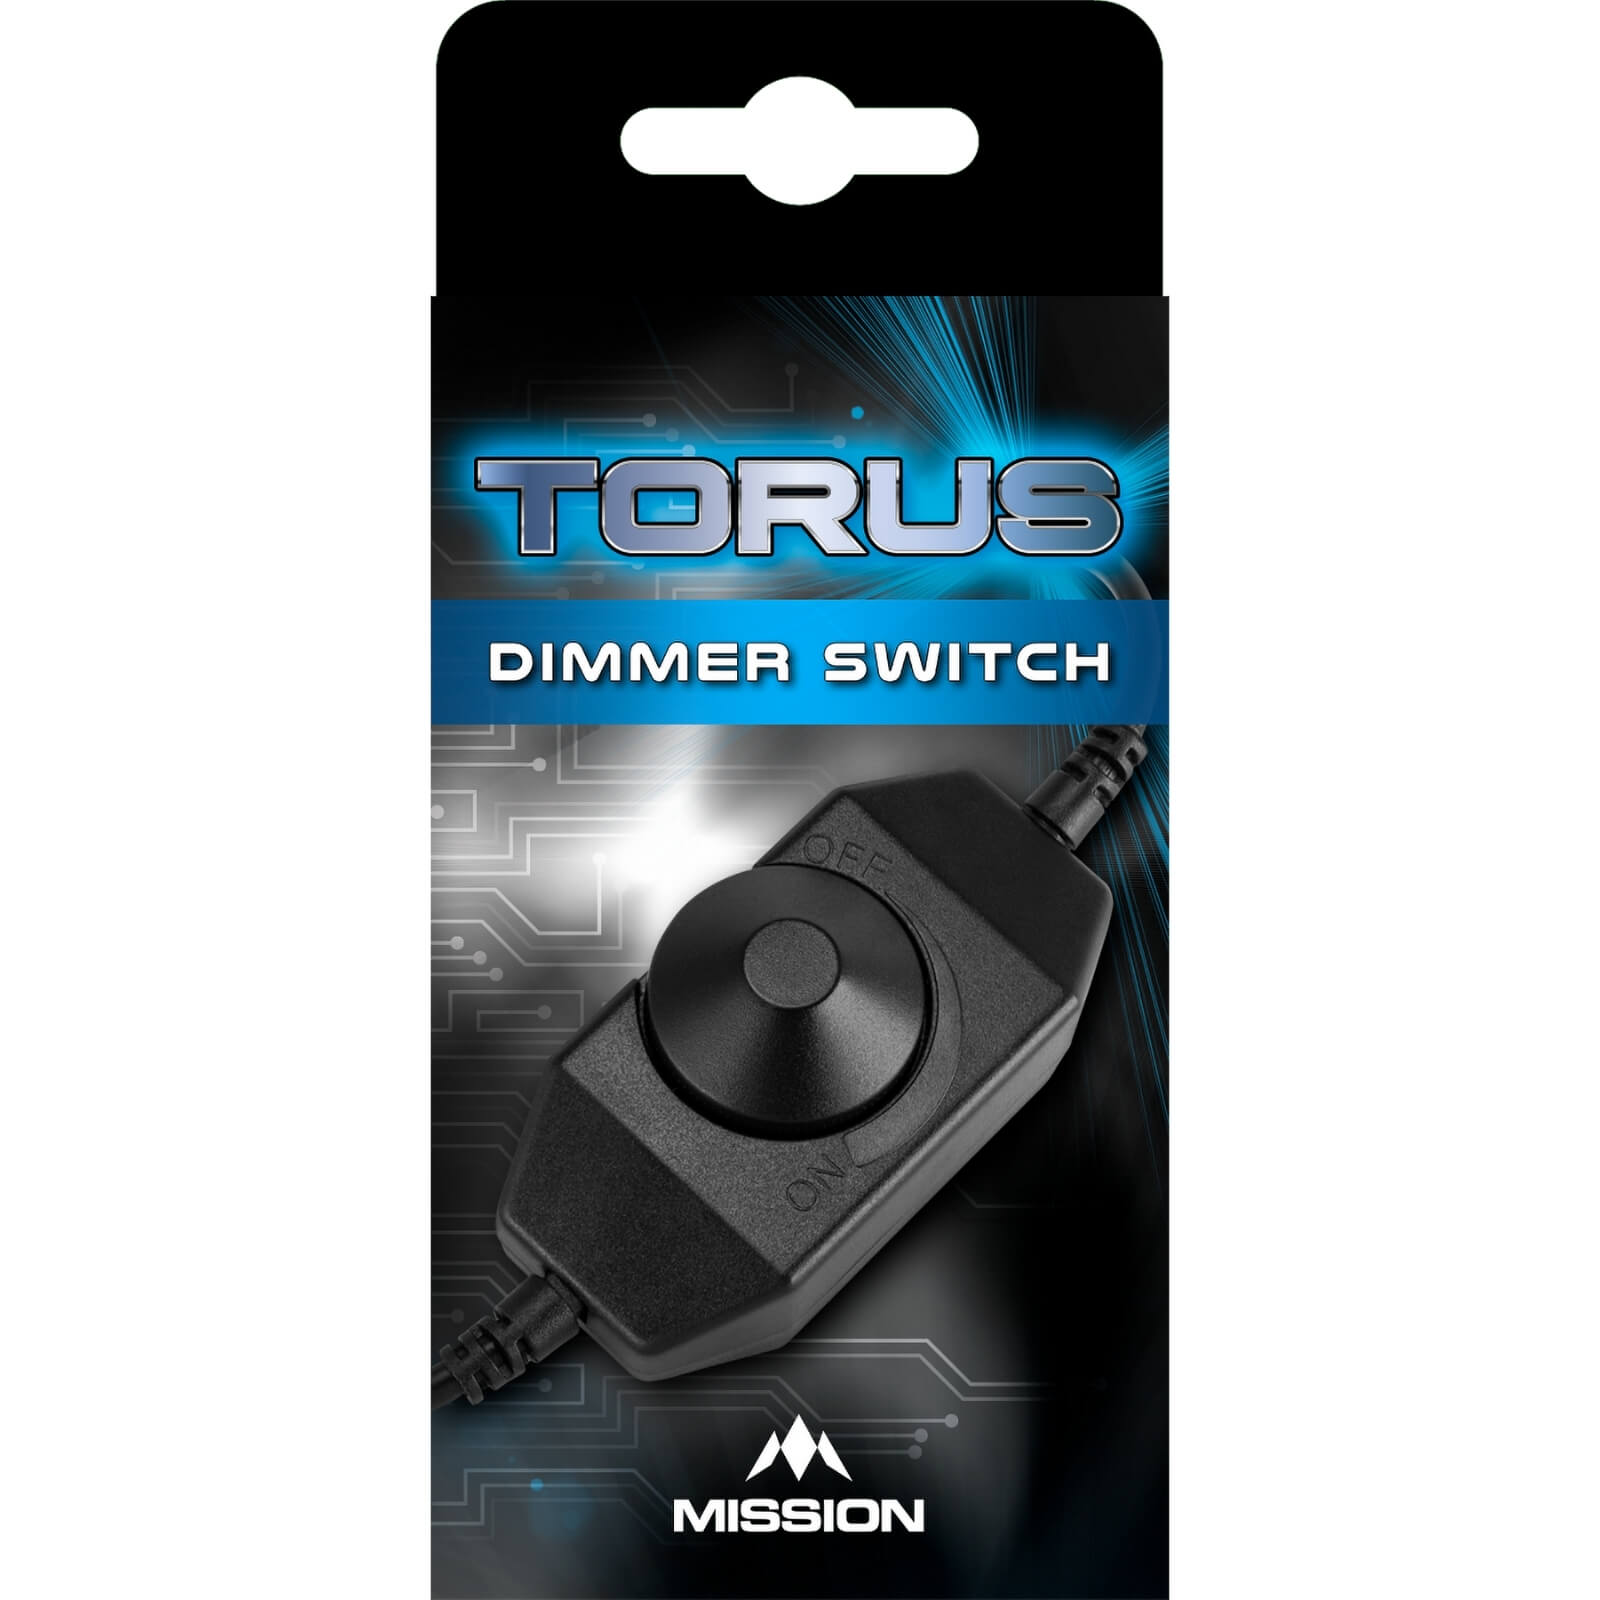 Dartboard Accessories - Mission - Dimmer Switch for Torus Dartboard Light 